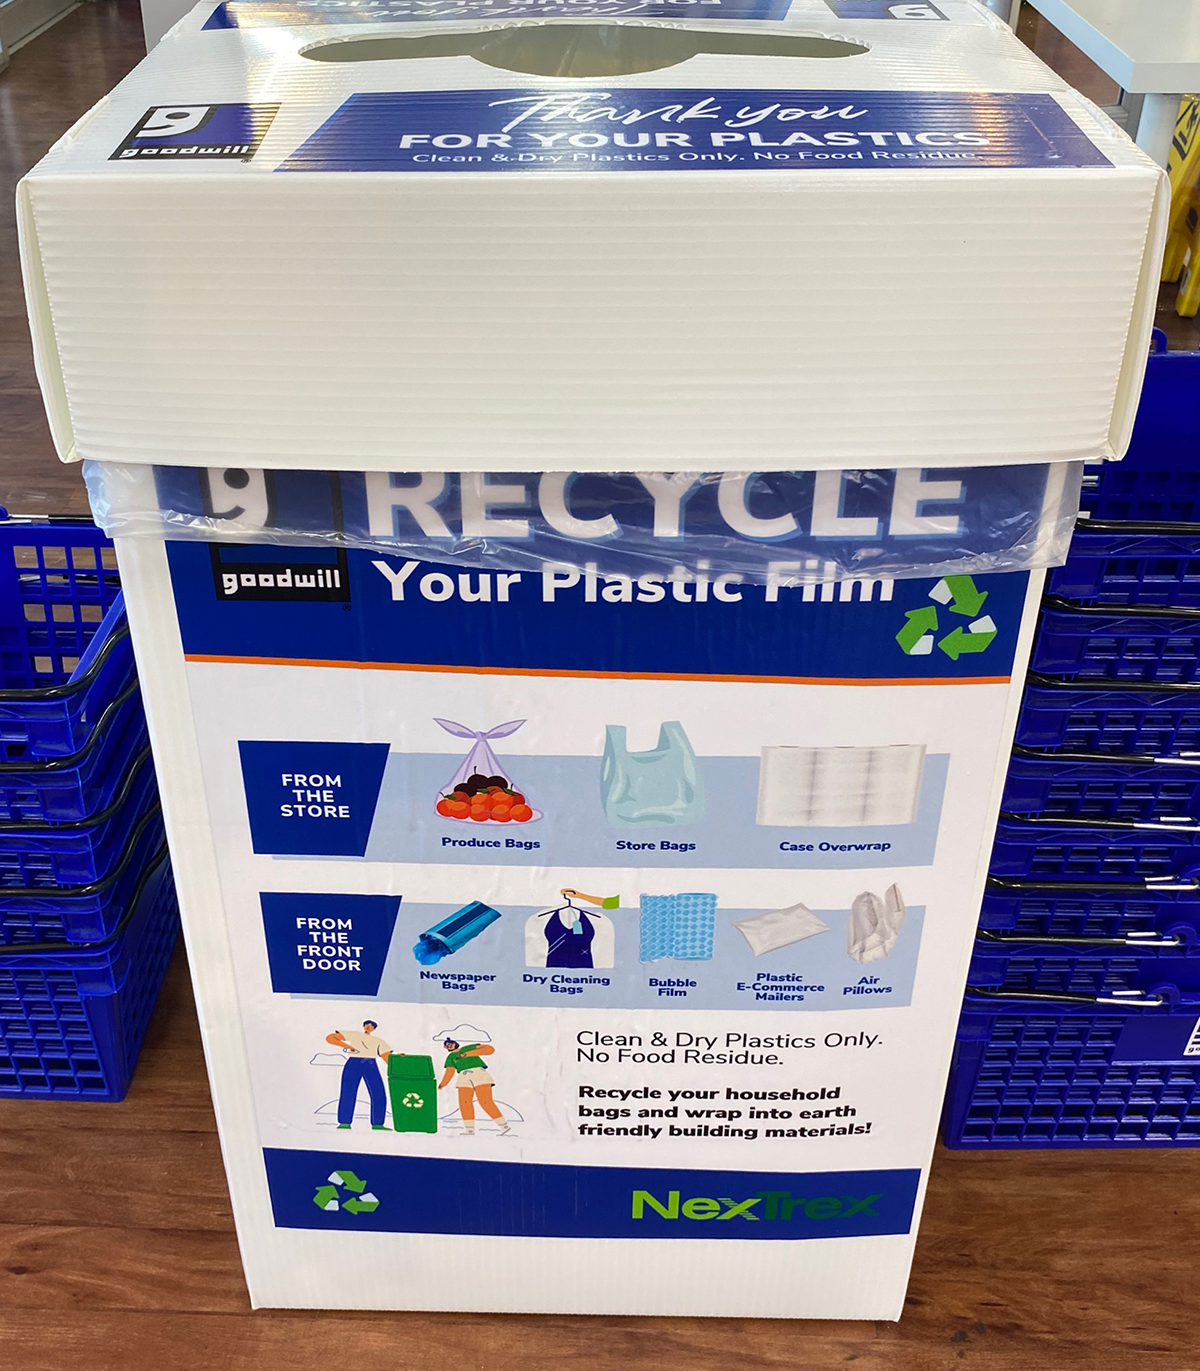 Recycle box for flimsy plastics